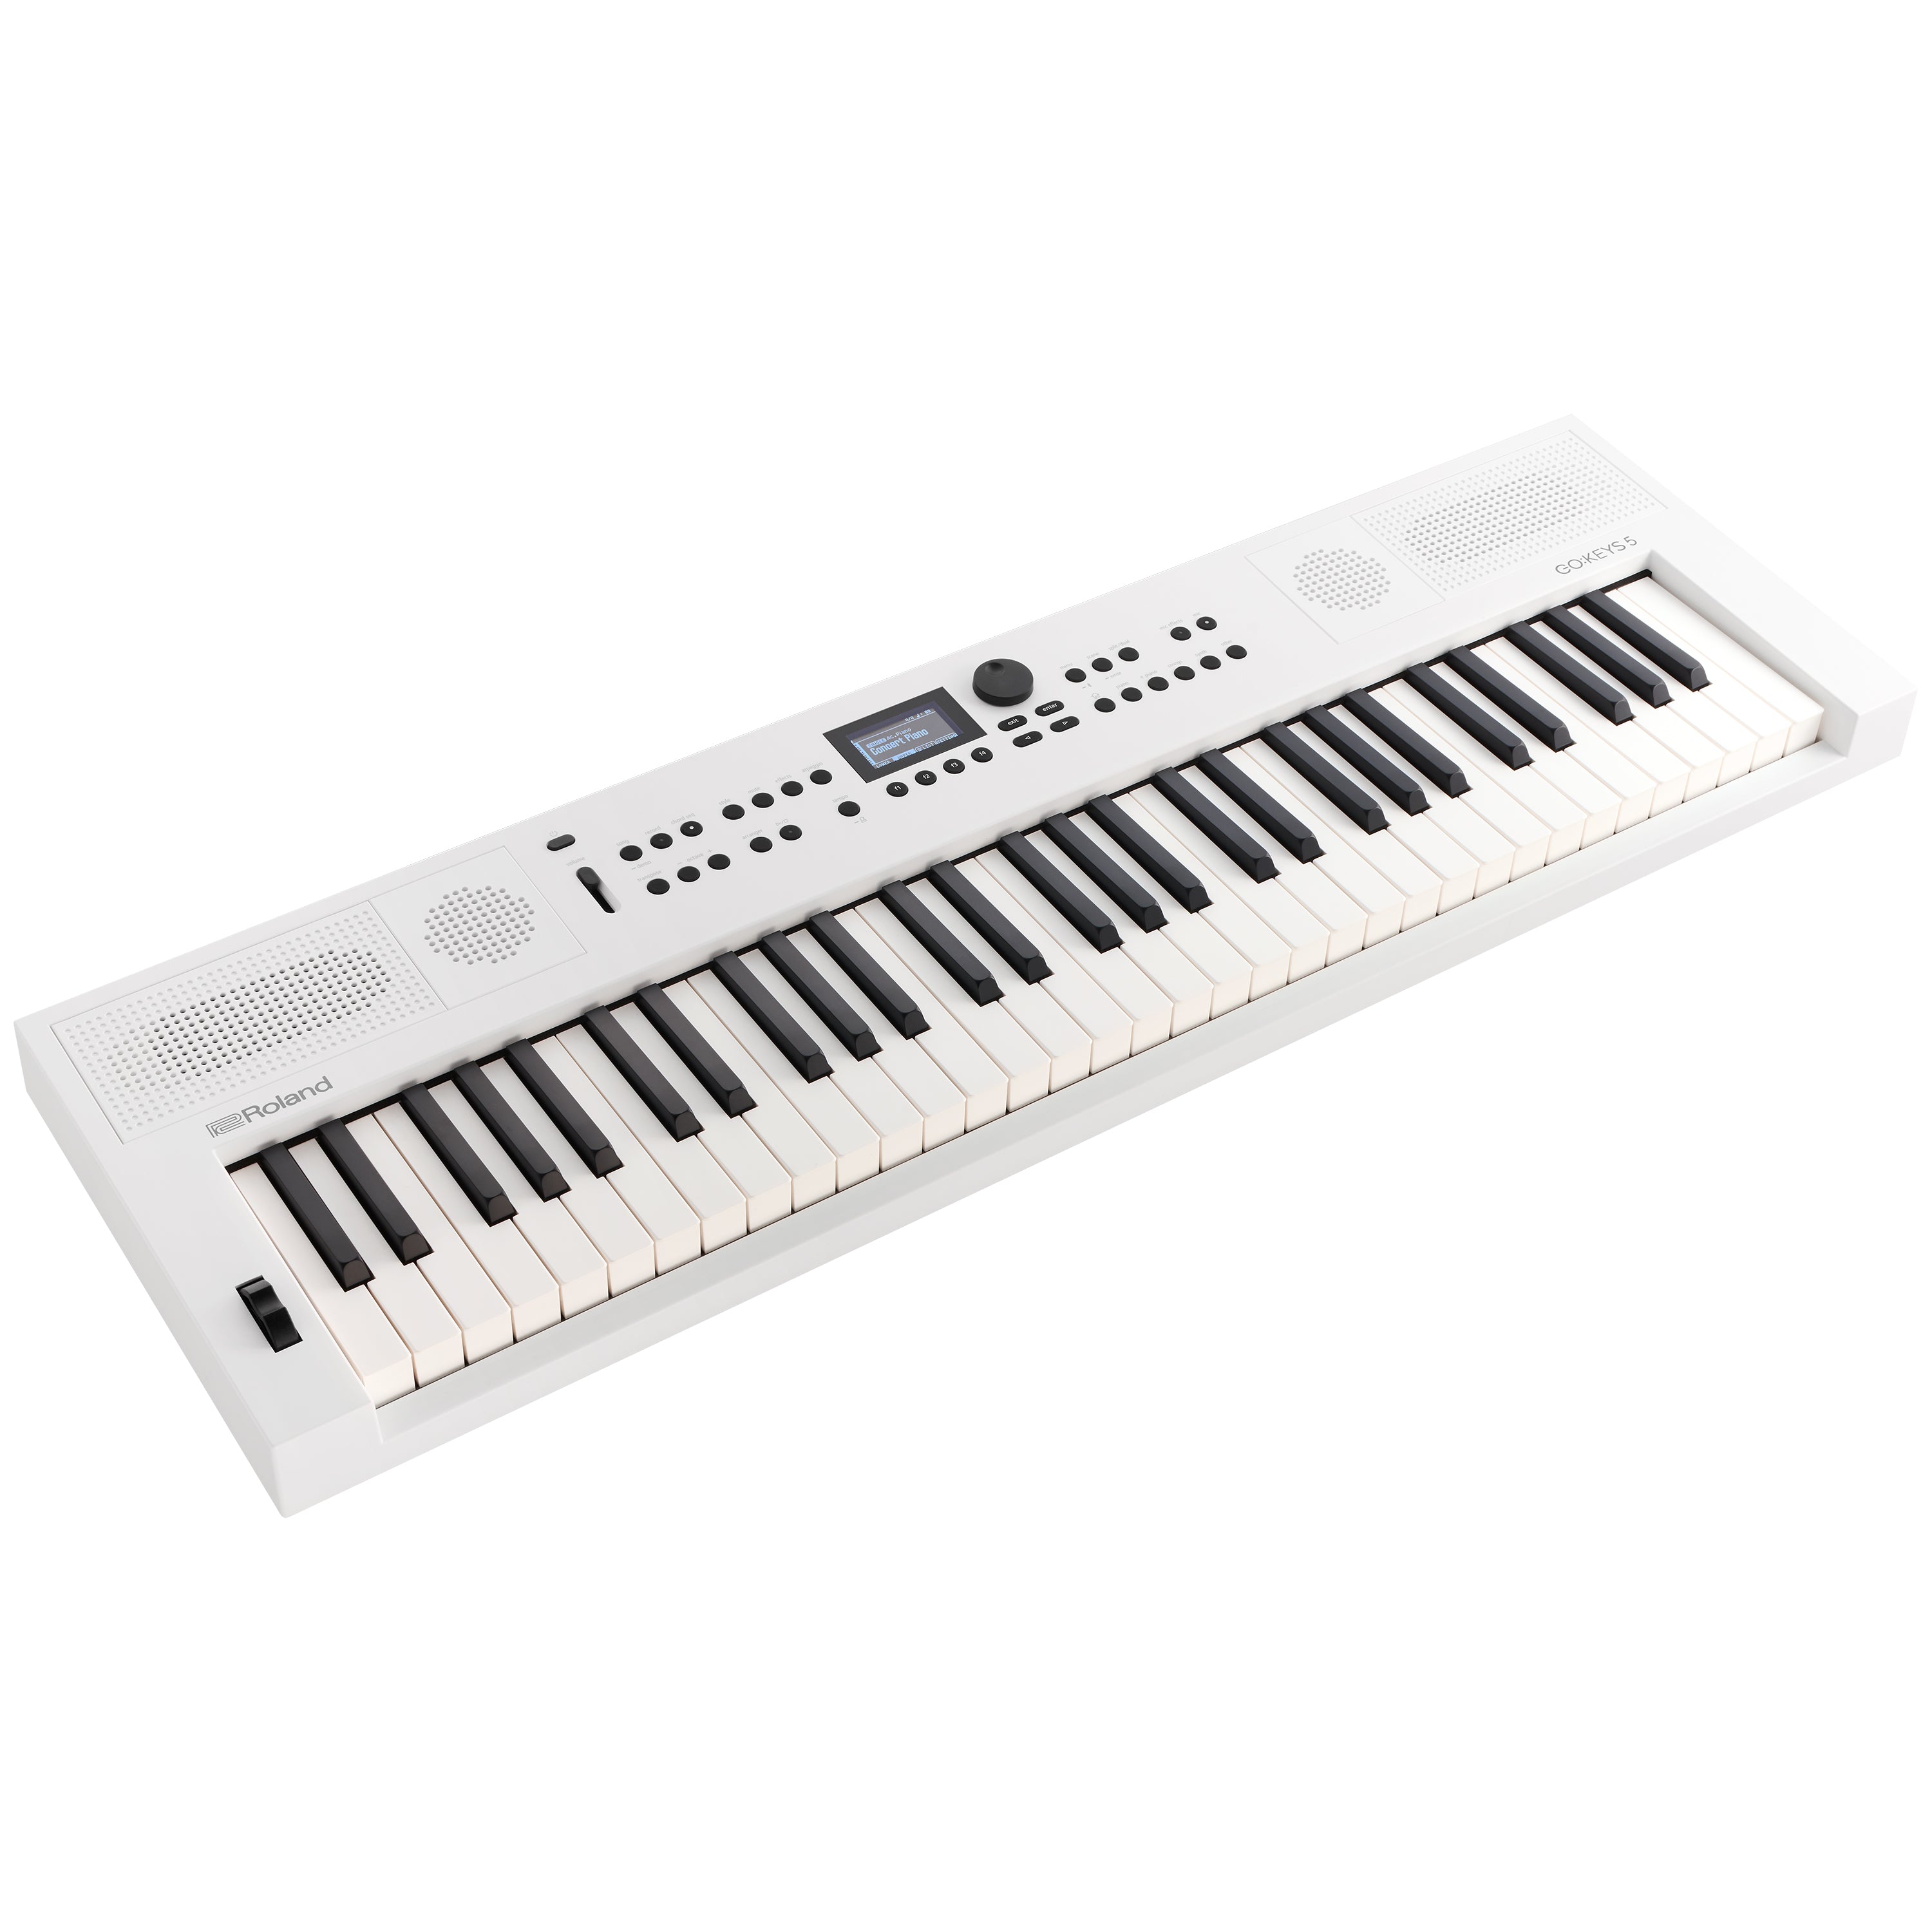 Roland GoKeys 5 Music Creation Keyboard - White, View 1